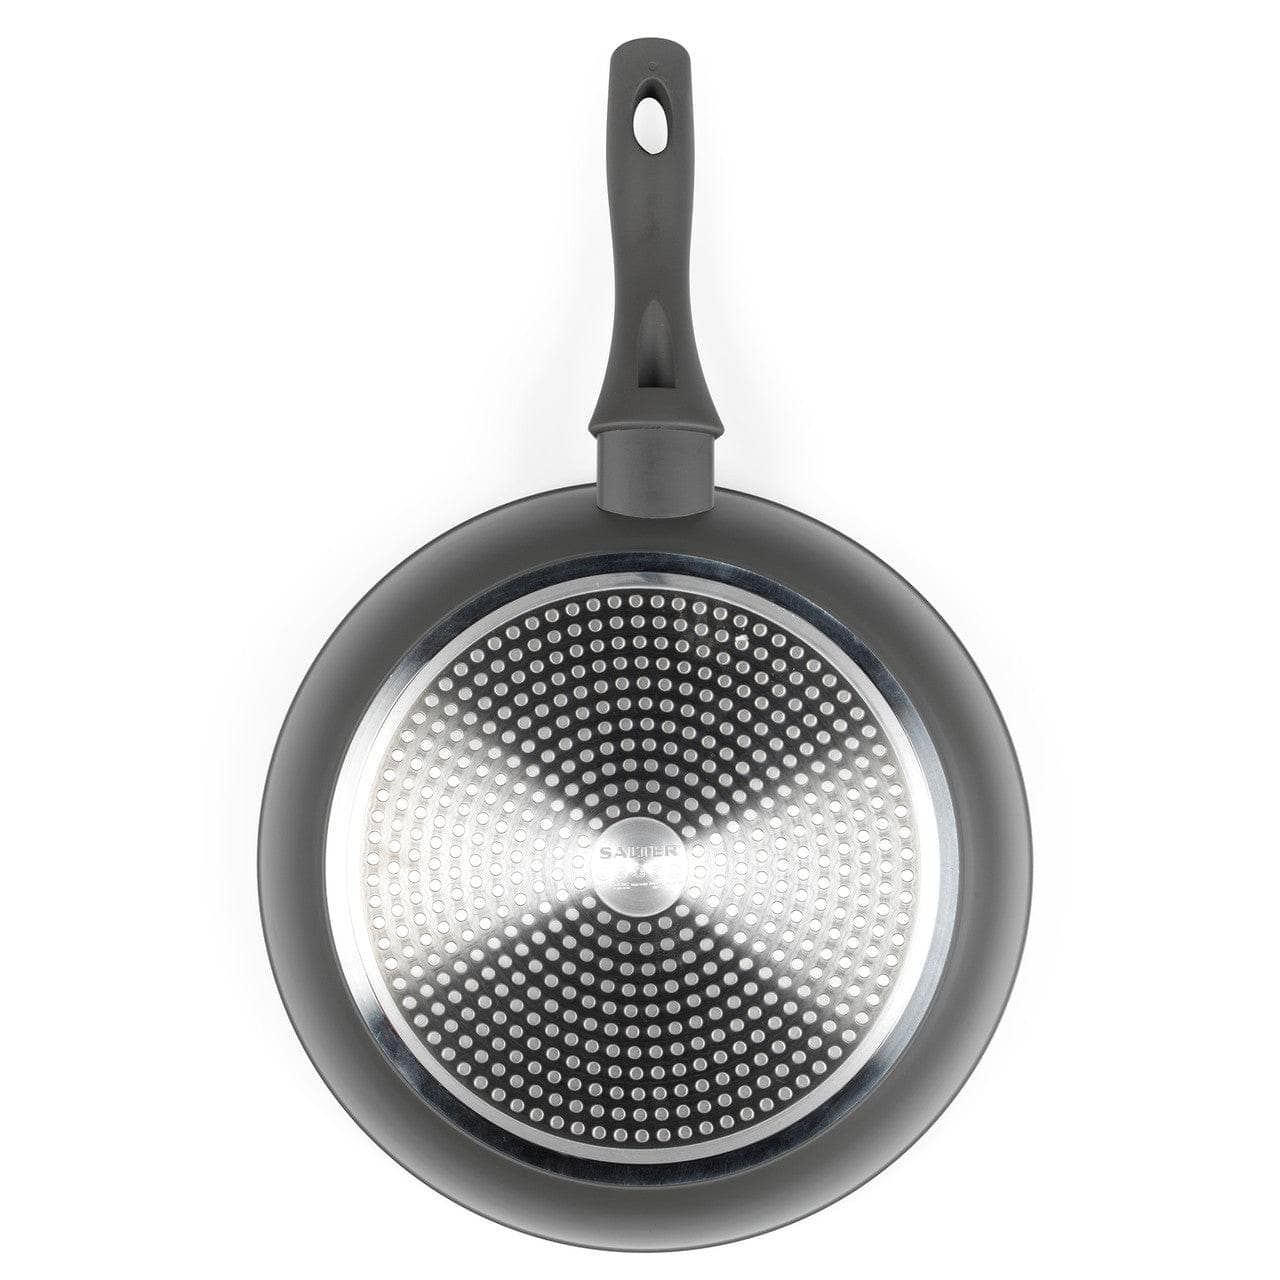 Kitchenware  -  Salter Cosmos 30cm Frypan  -  60004844